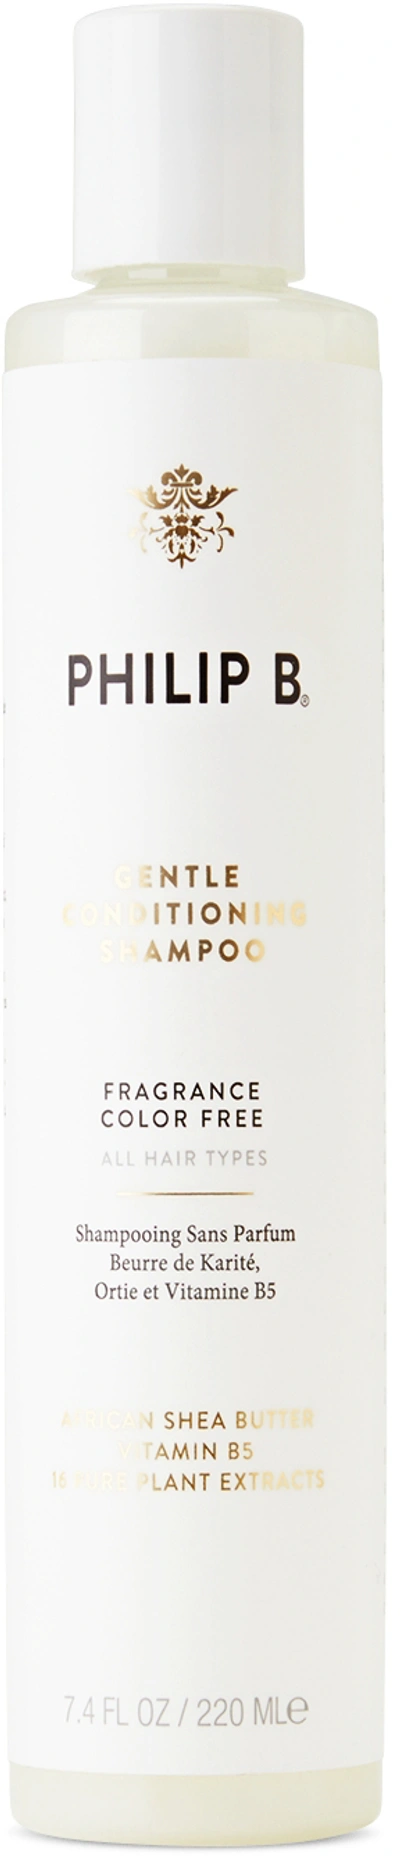 Philip B Gentle Conditioning Shampoo (7.4 Fl. Oz.) In Na